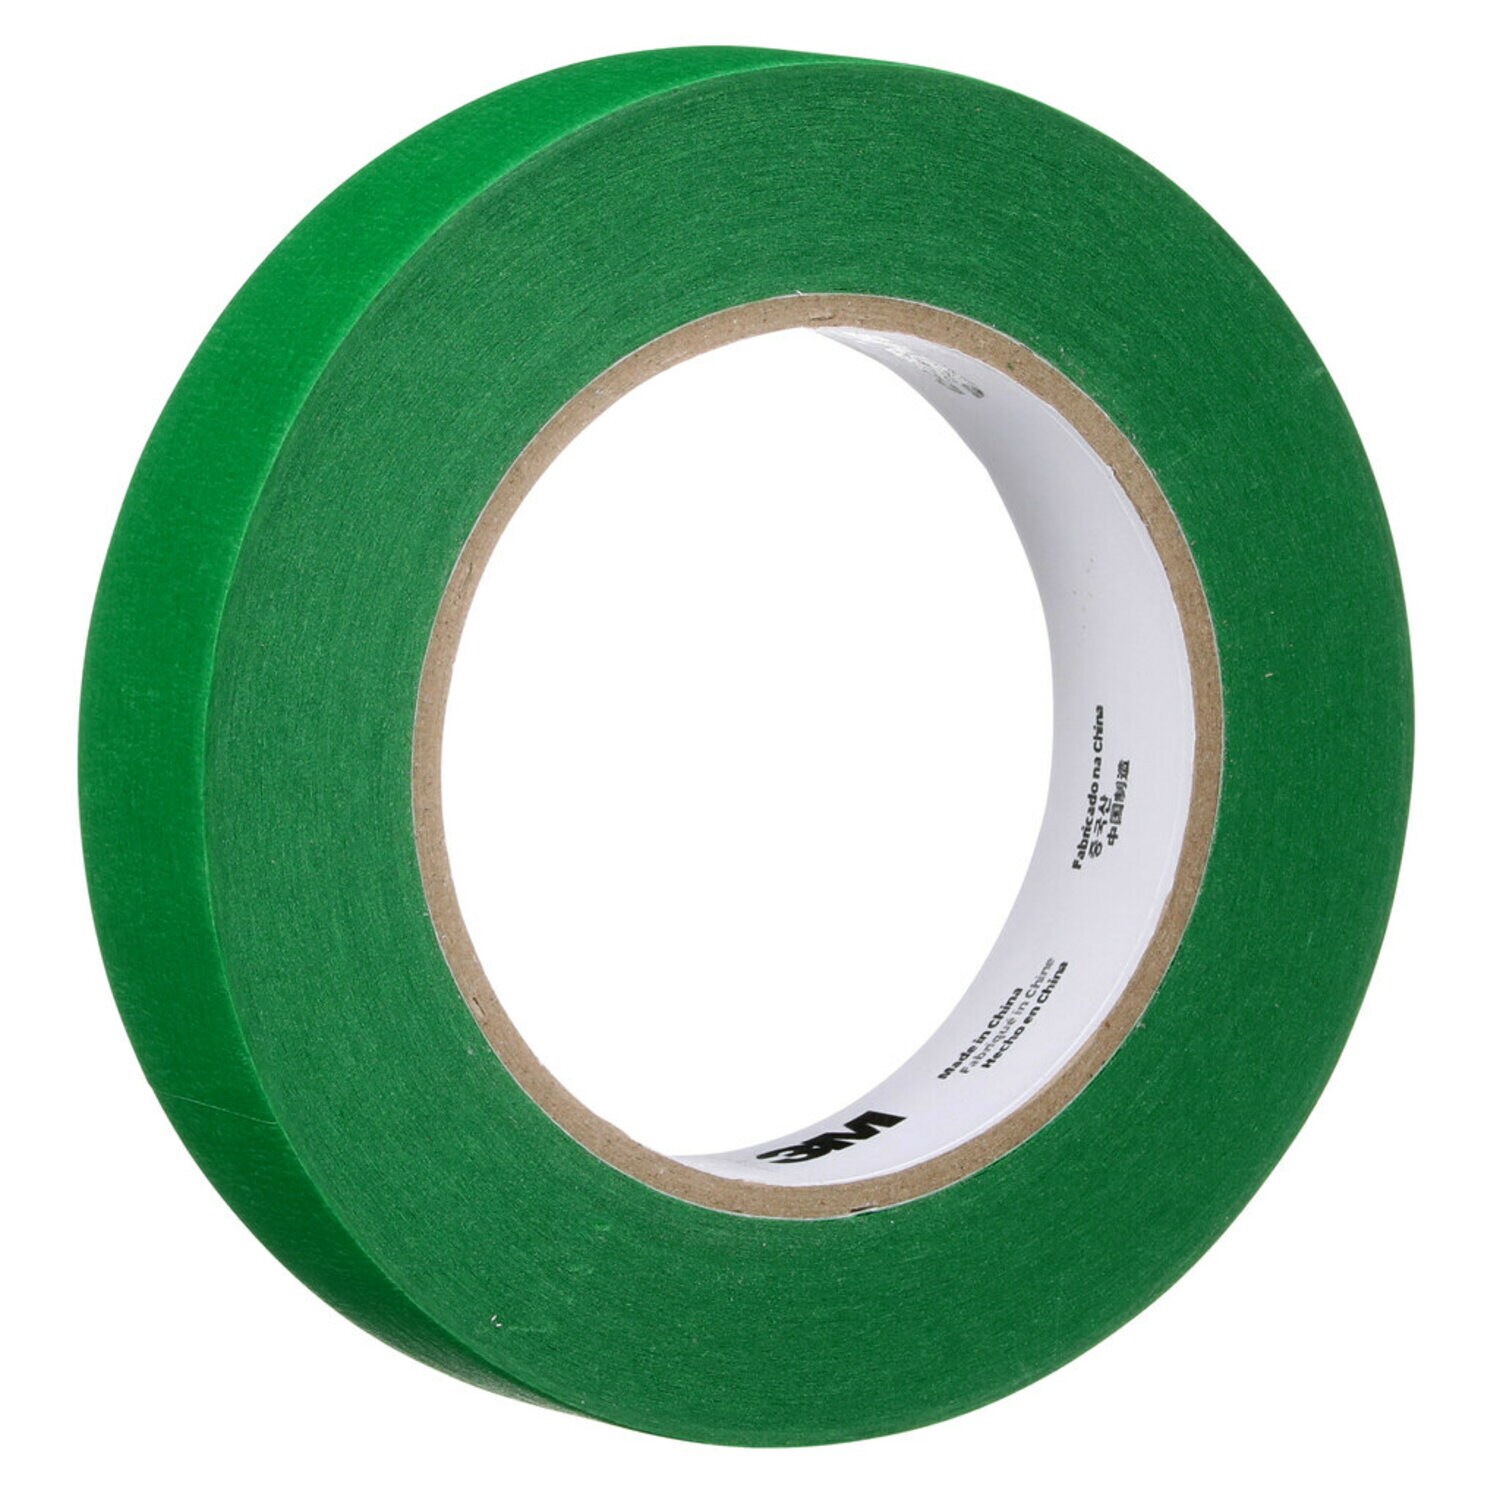 7100299469 - 3M UV Resistant Green Masking Tape, 24 mm x 55 m, 48 Rolls/Case